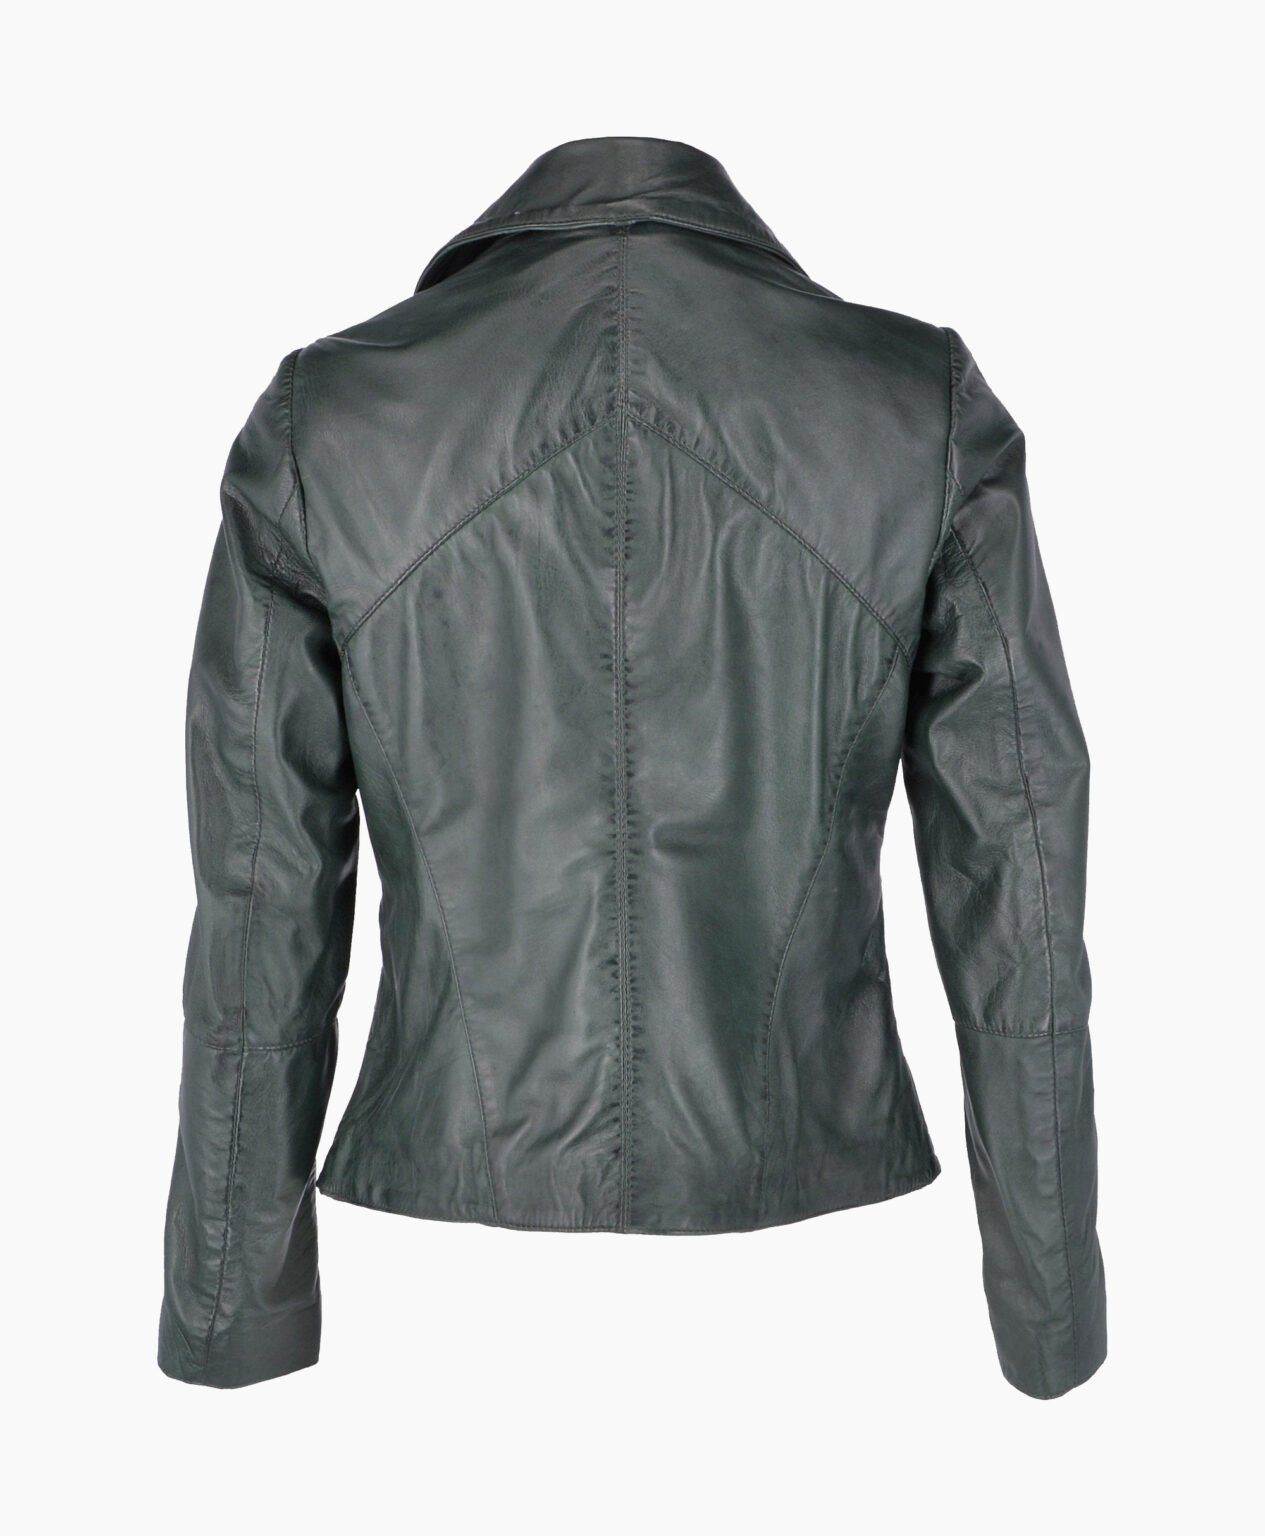 vogue-jacket-leather-biker-jacket-green-el-dorado-image202